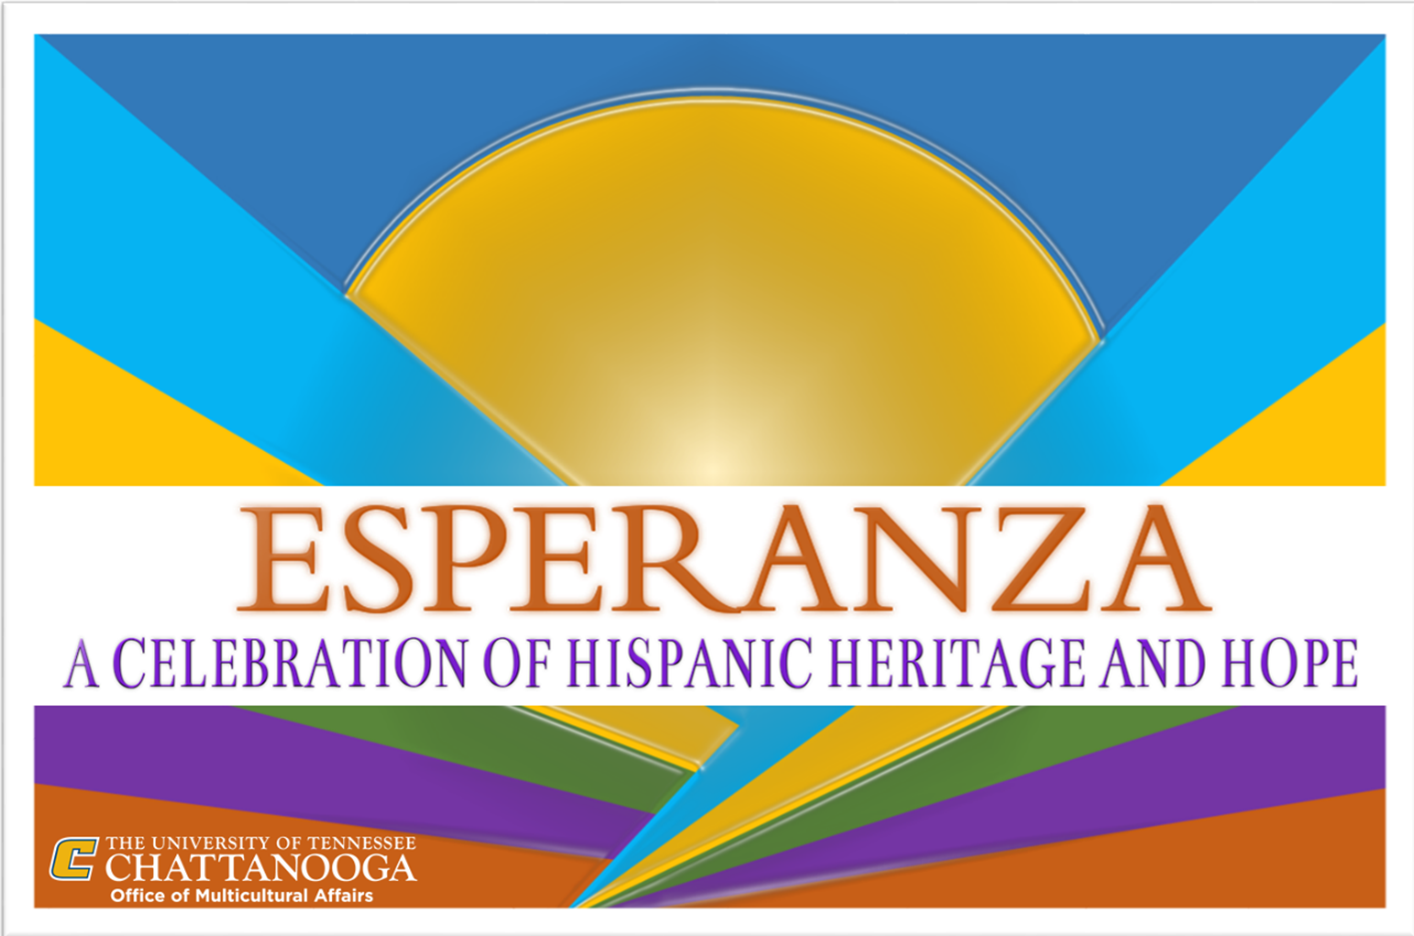 Esperanza - A Celebration of Hispanic Heritage and Hope